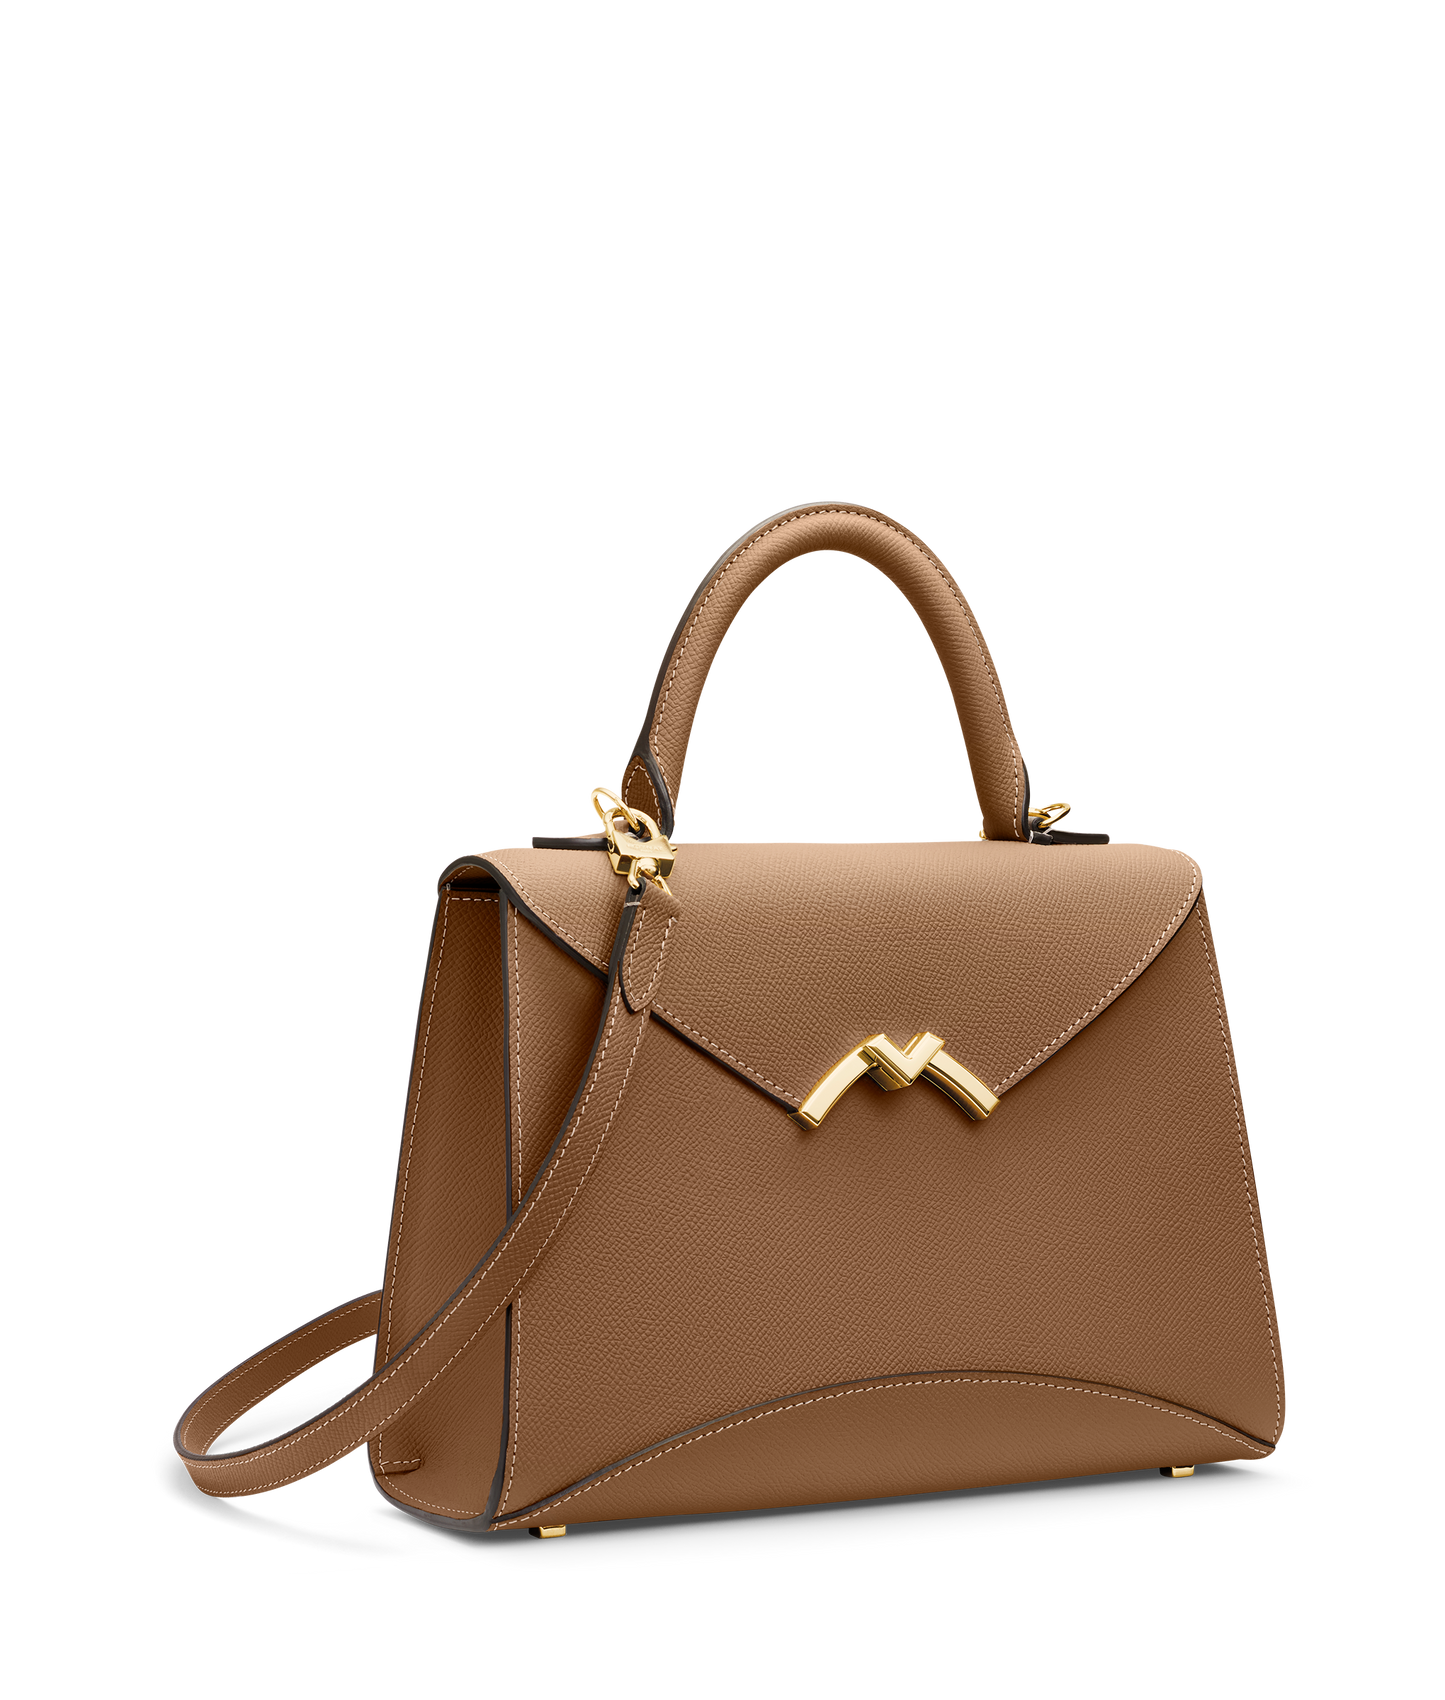 Moynat Gabrielle PM w/ Tags - Brown Handle Bags, Handbags